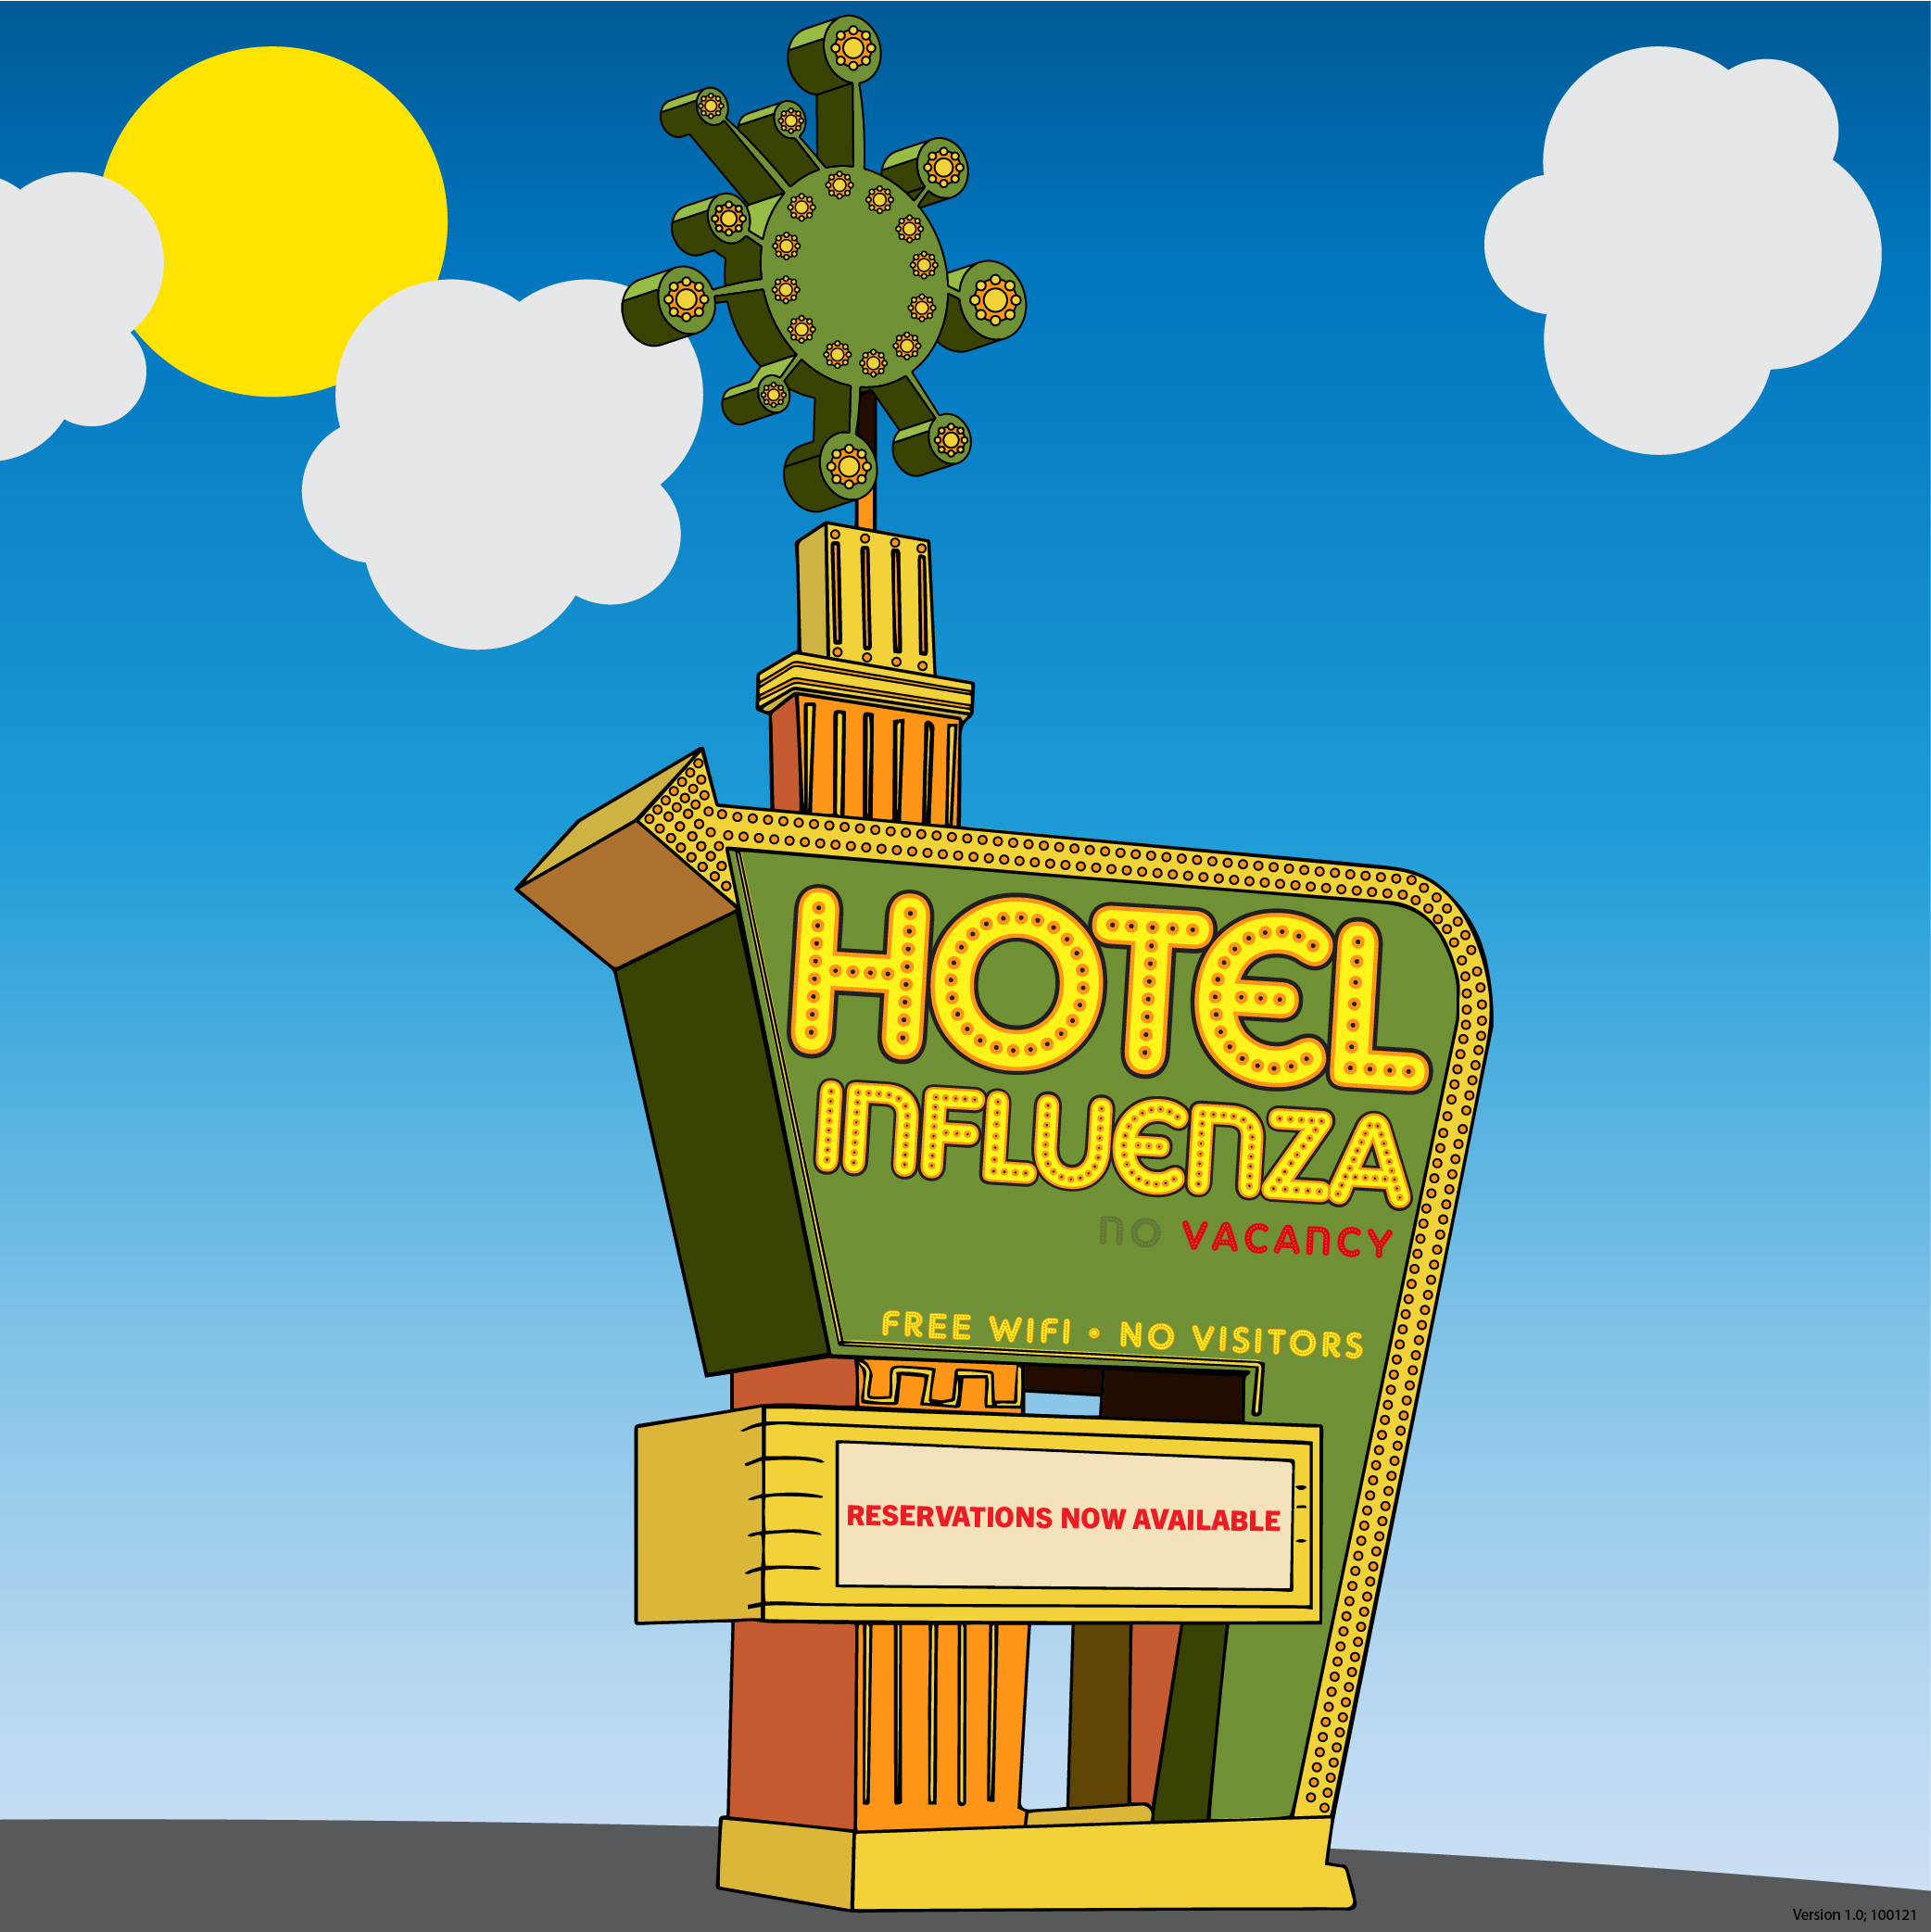 Hotel Influenza Sign